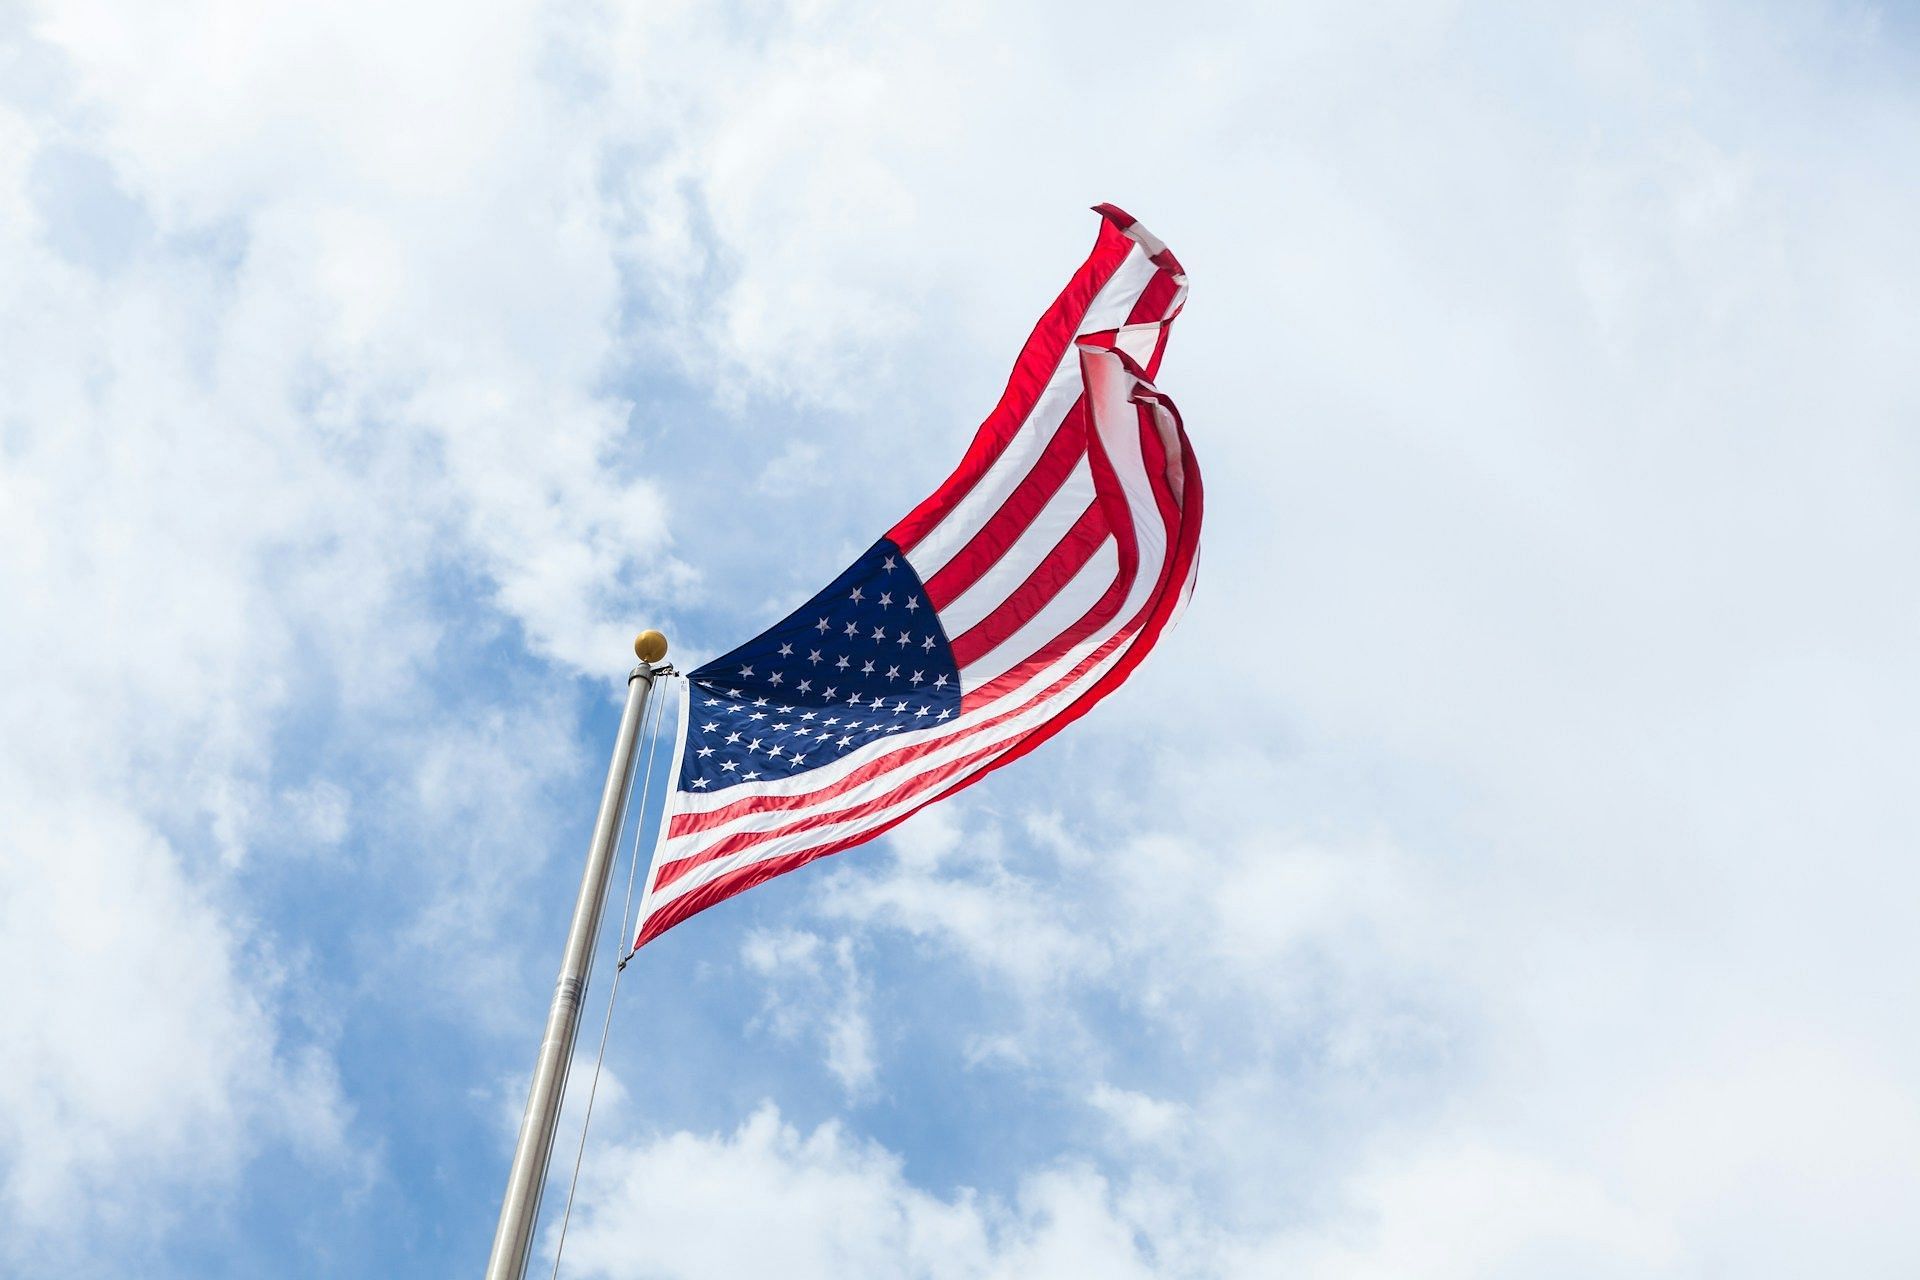 A representative image of the American flag is used. (Image via Unsplash)